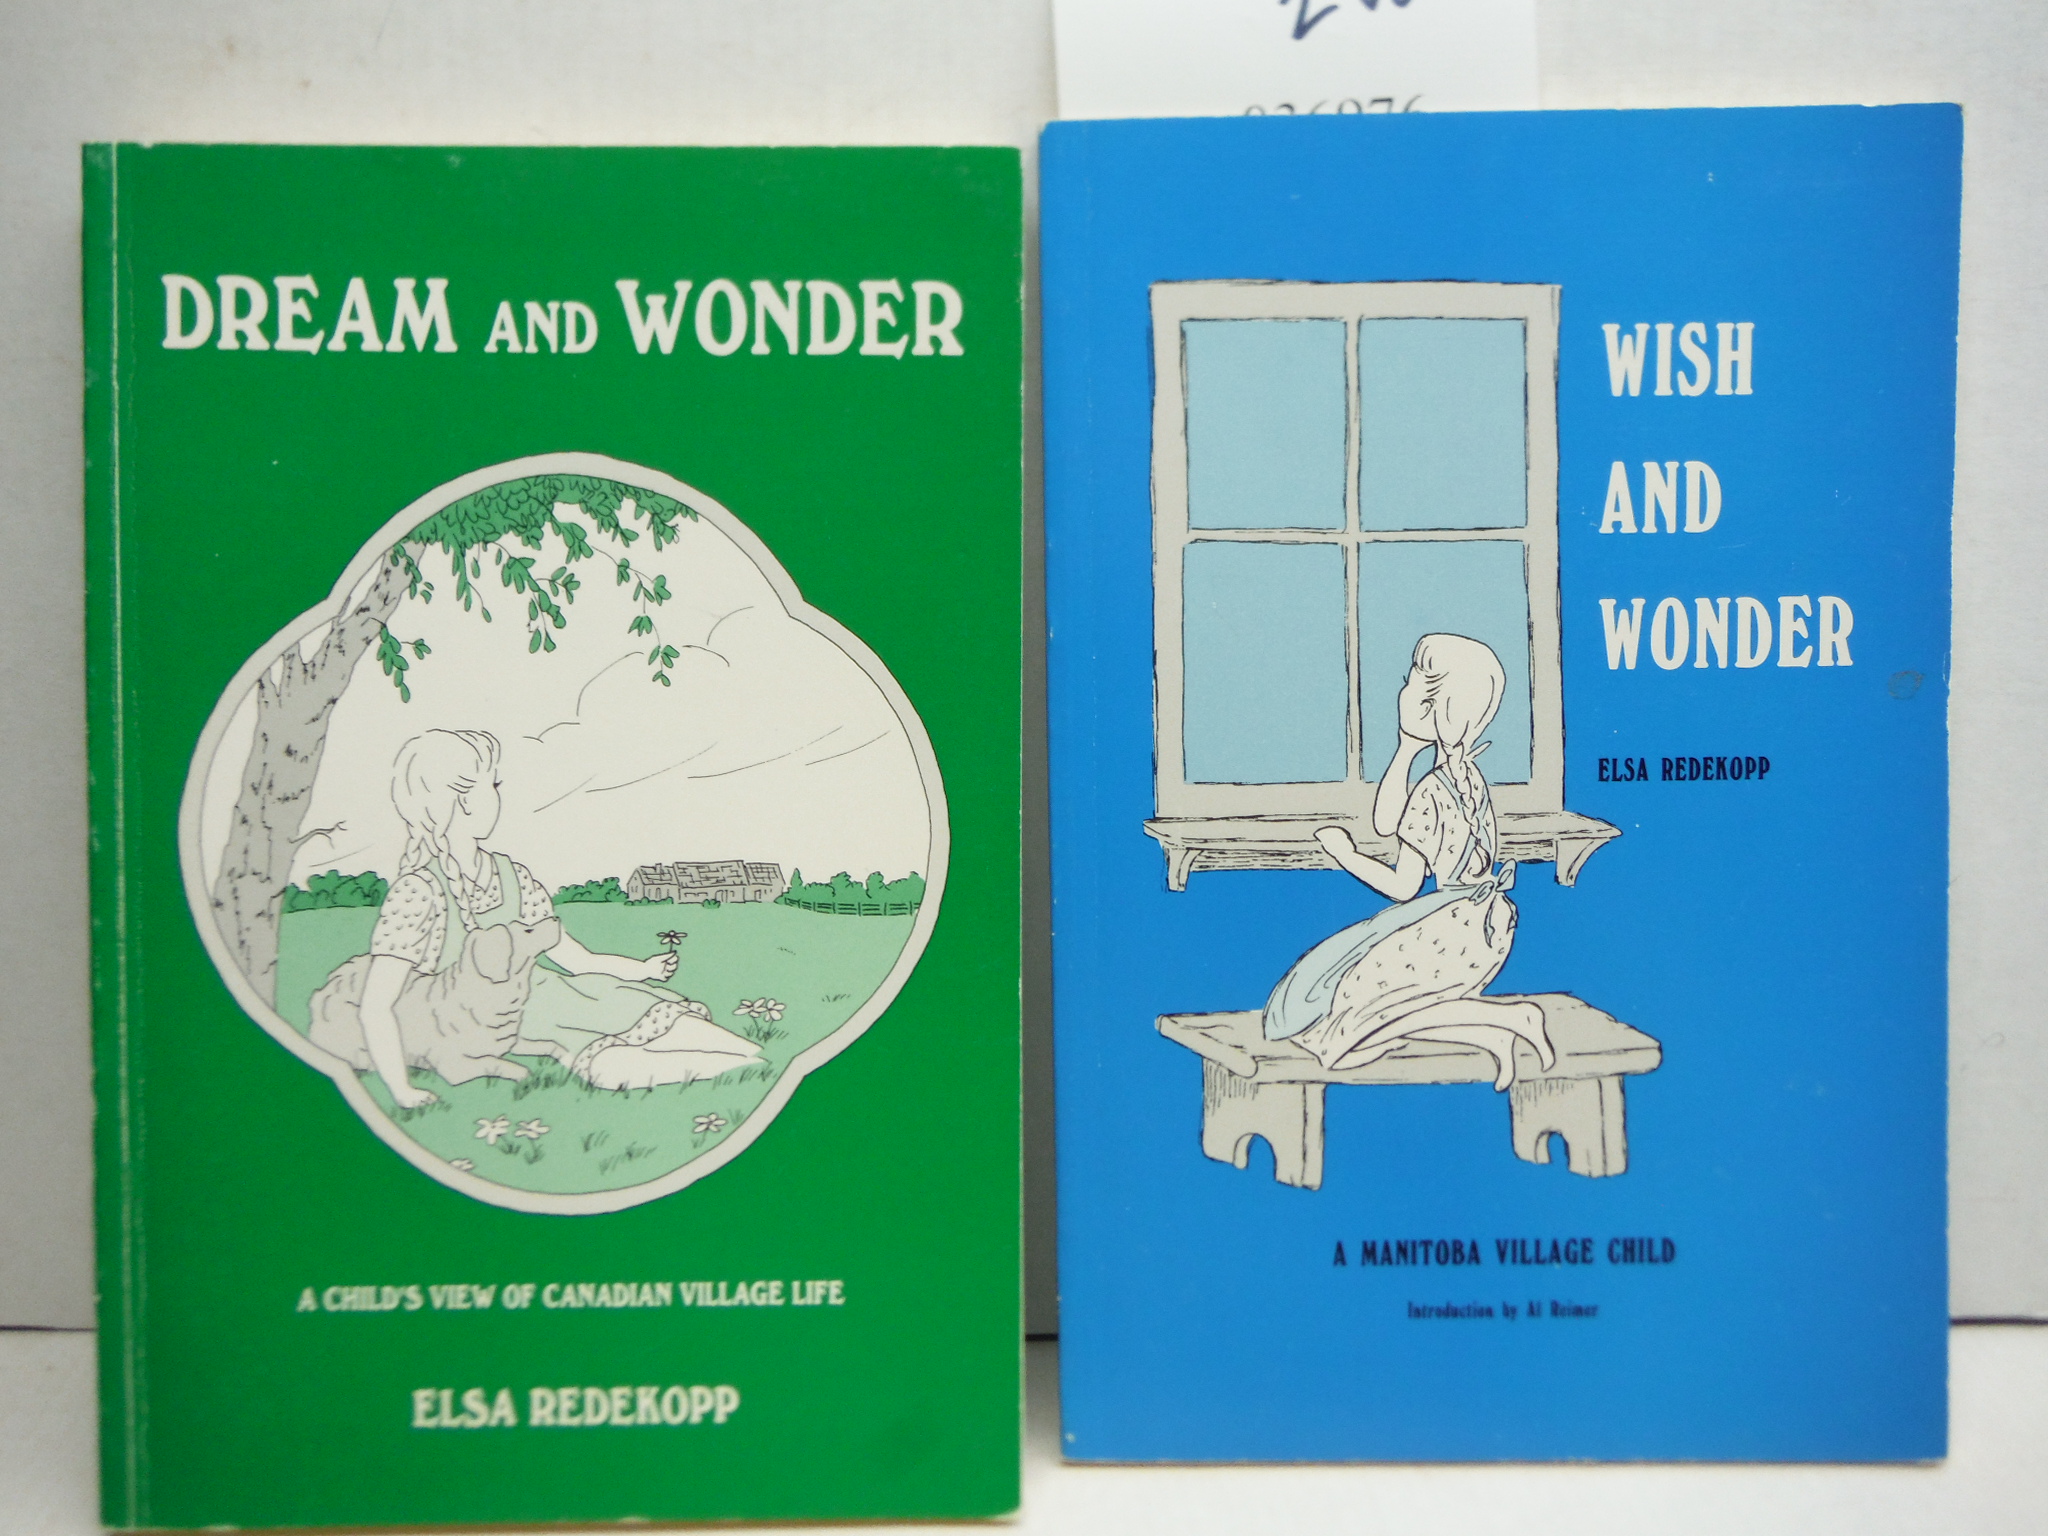 2 paperbacks by Elsa Redekopp